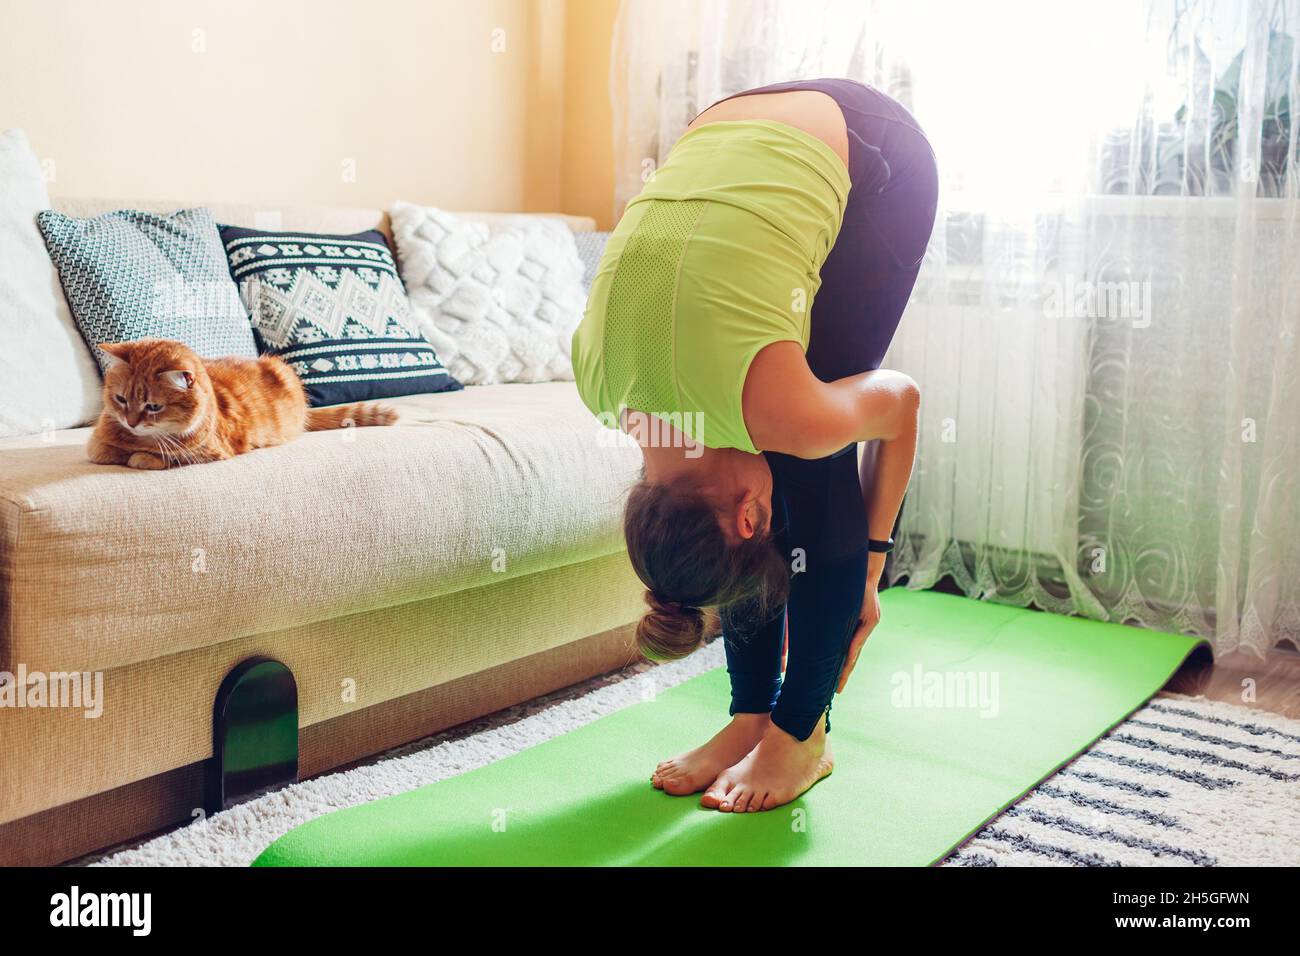 Home yoga workout during coronavirus lockdown. Uttanasana standing forward bend pose. Woman training using mat by cat. Stretching exercises Stock Photo